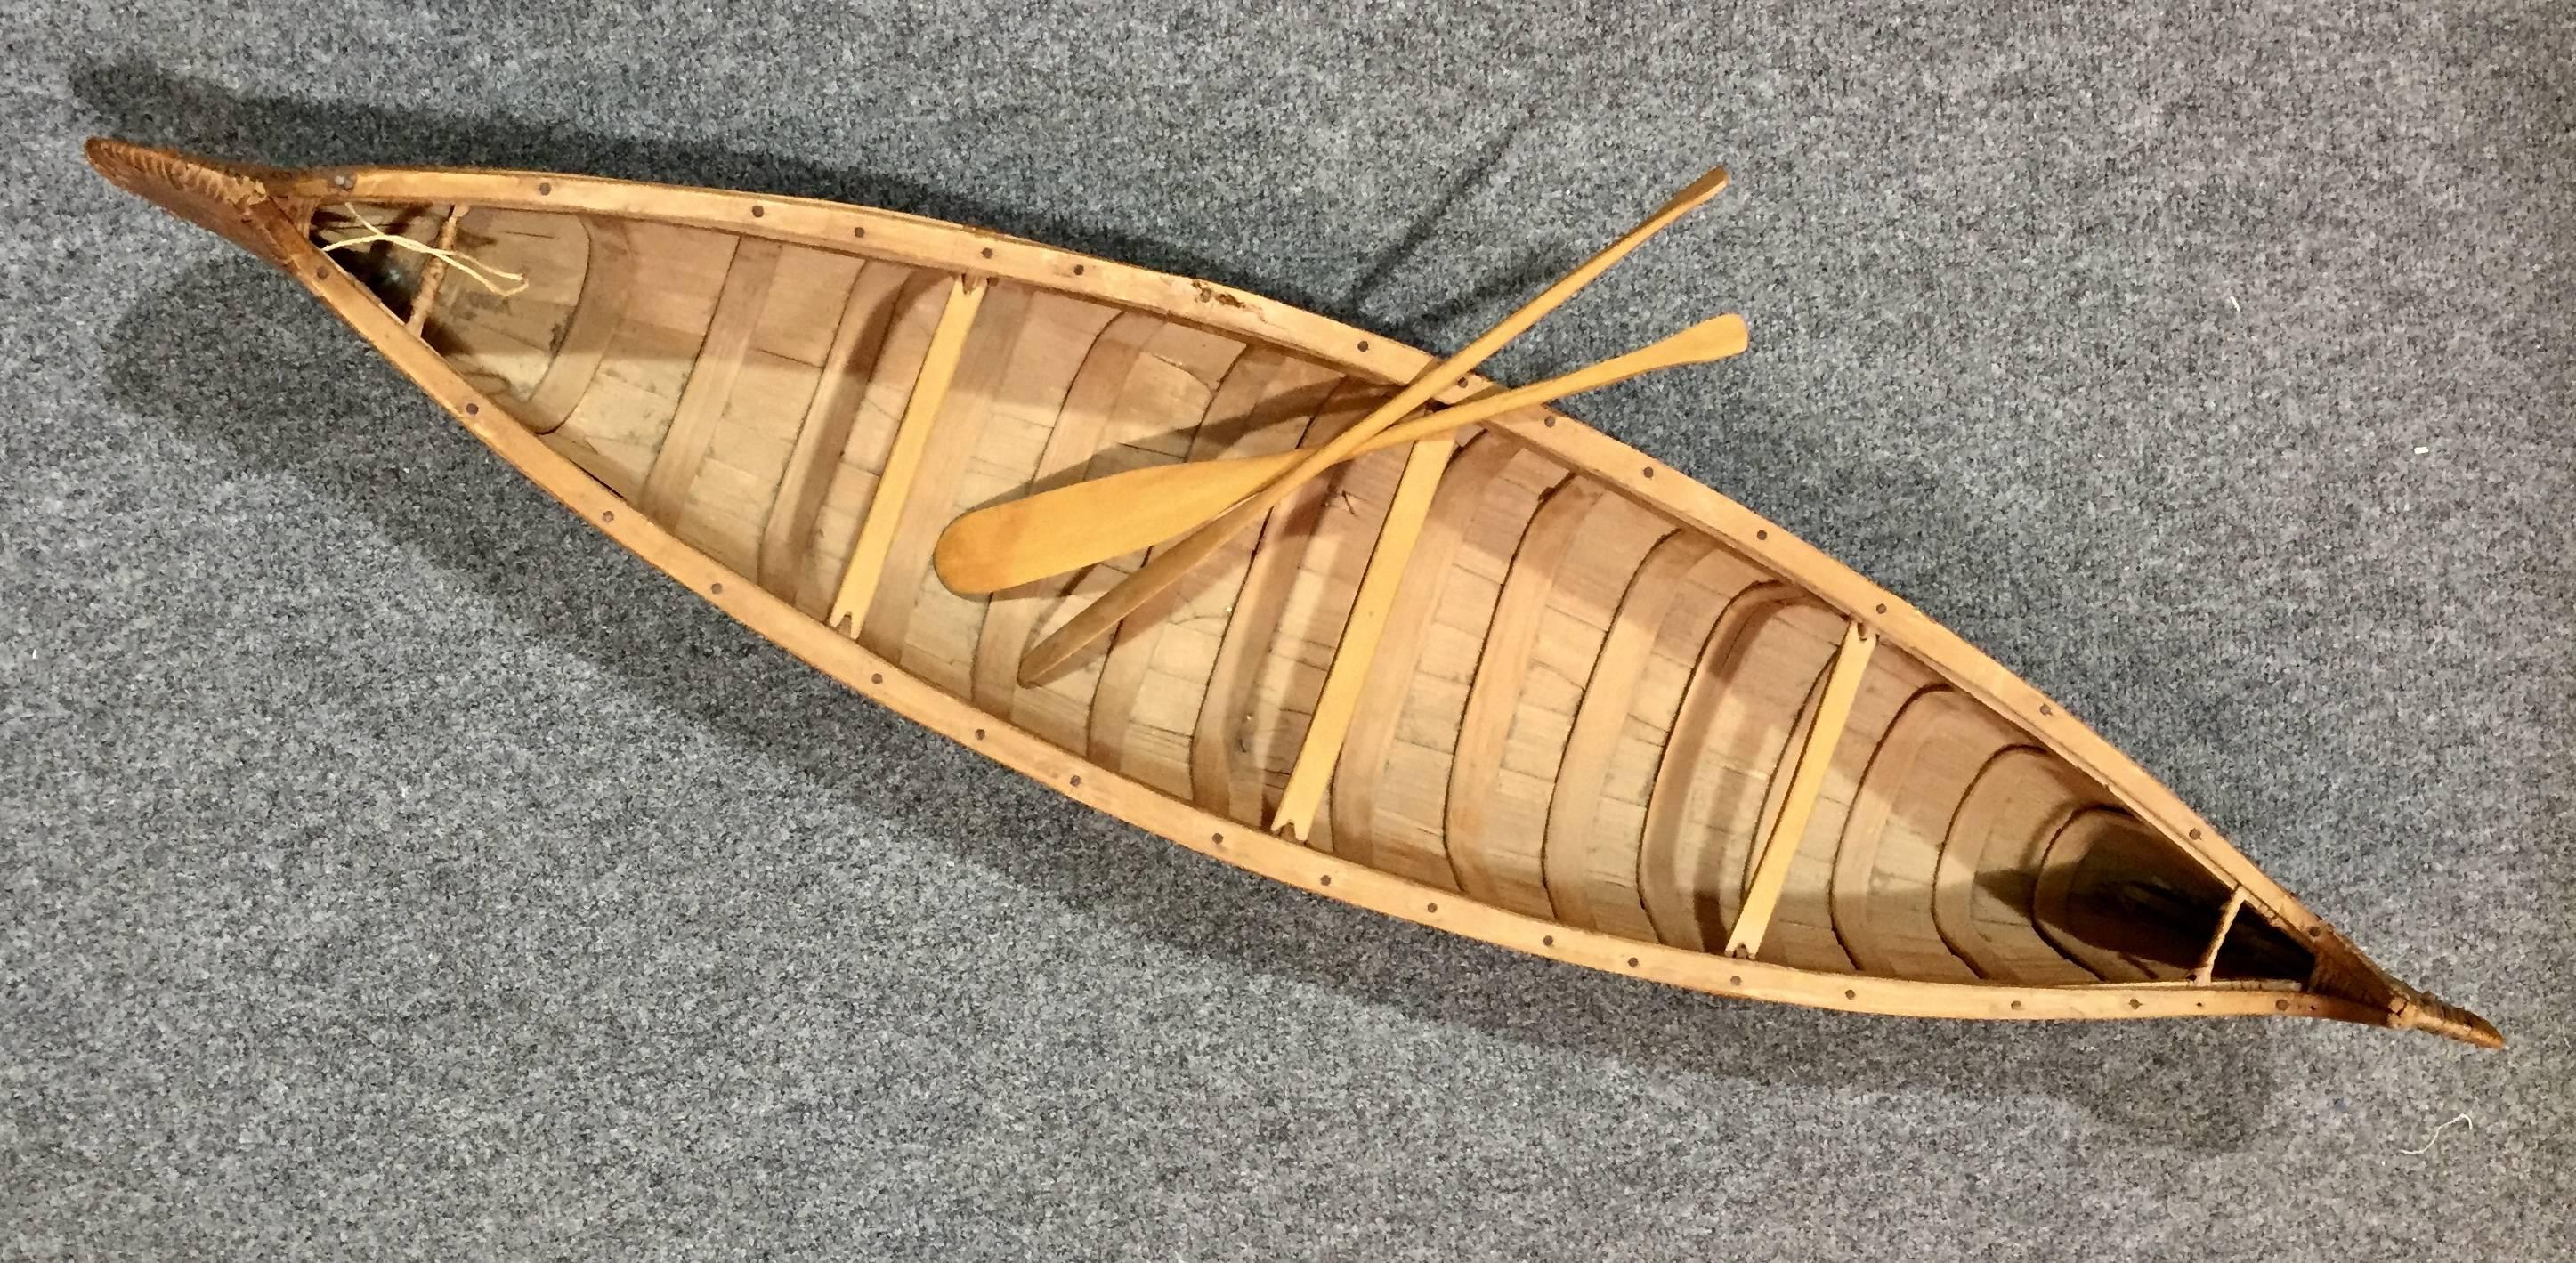 Good size birch bark canoe model from Maine including oars.